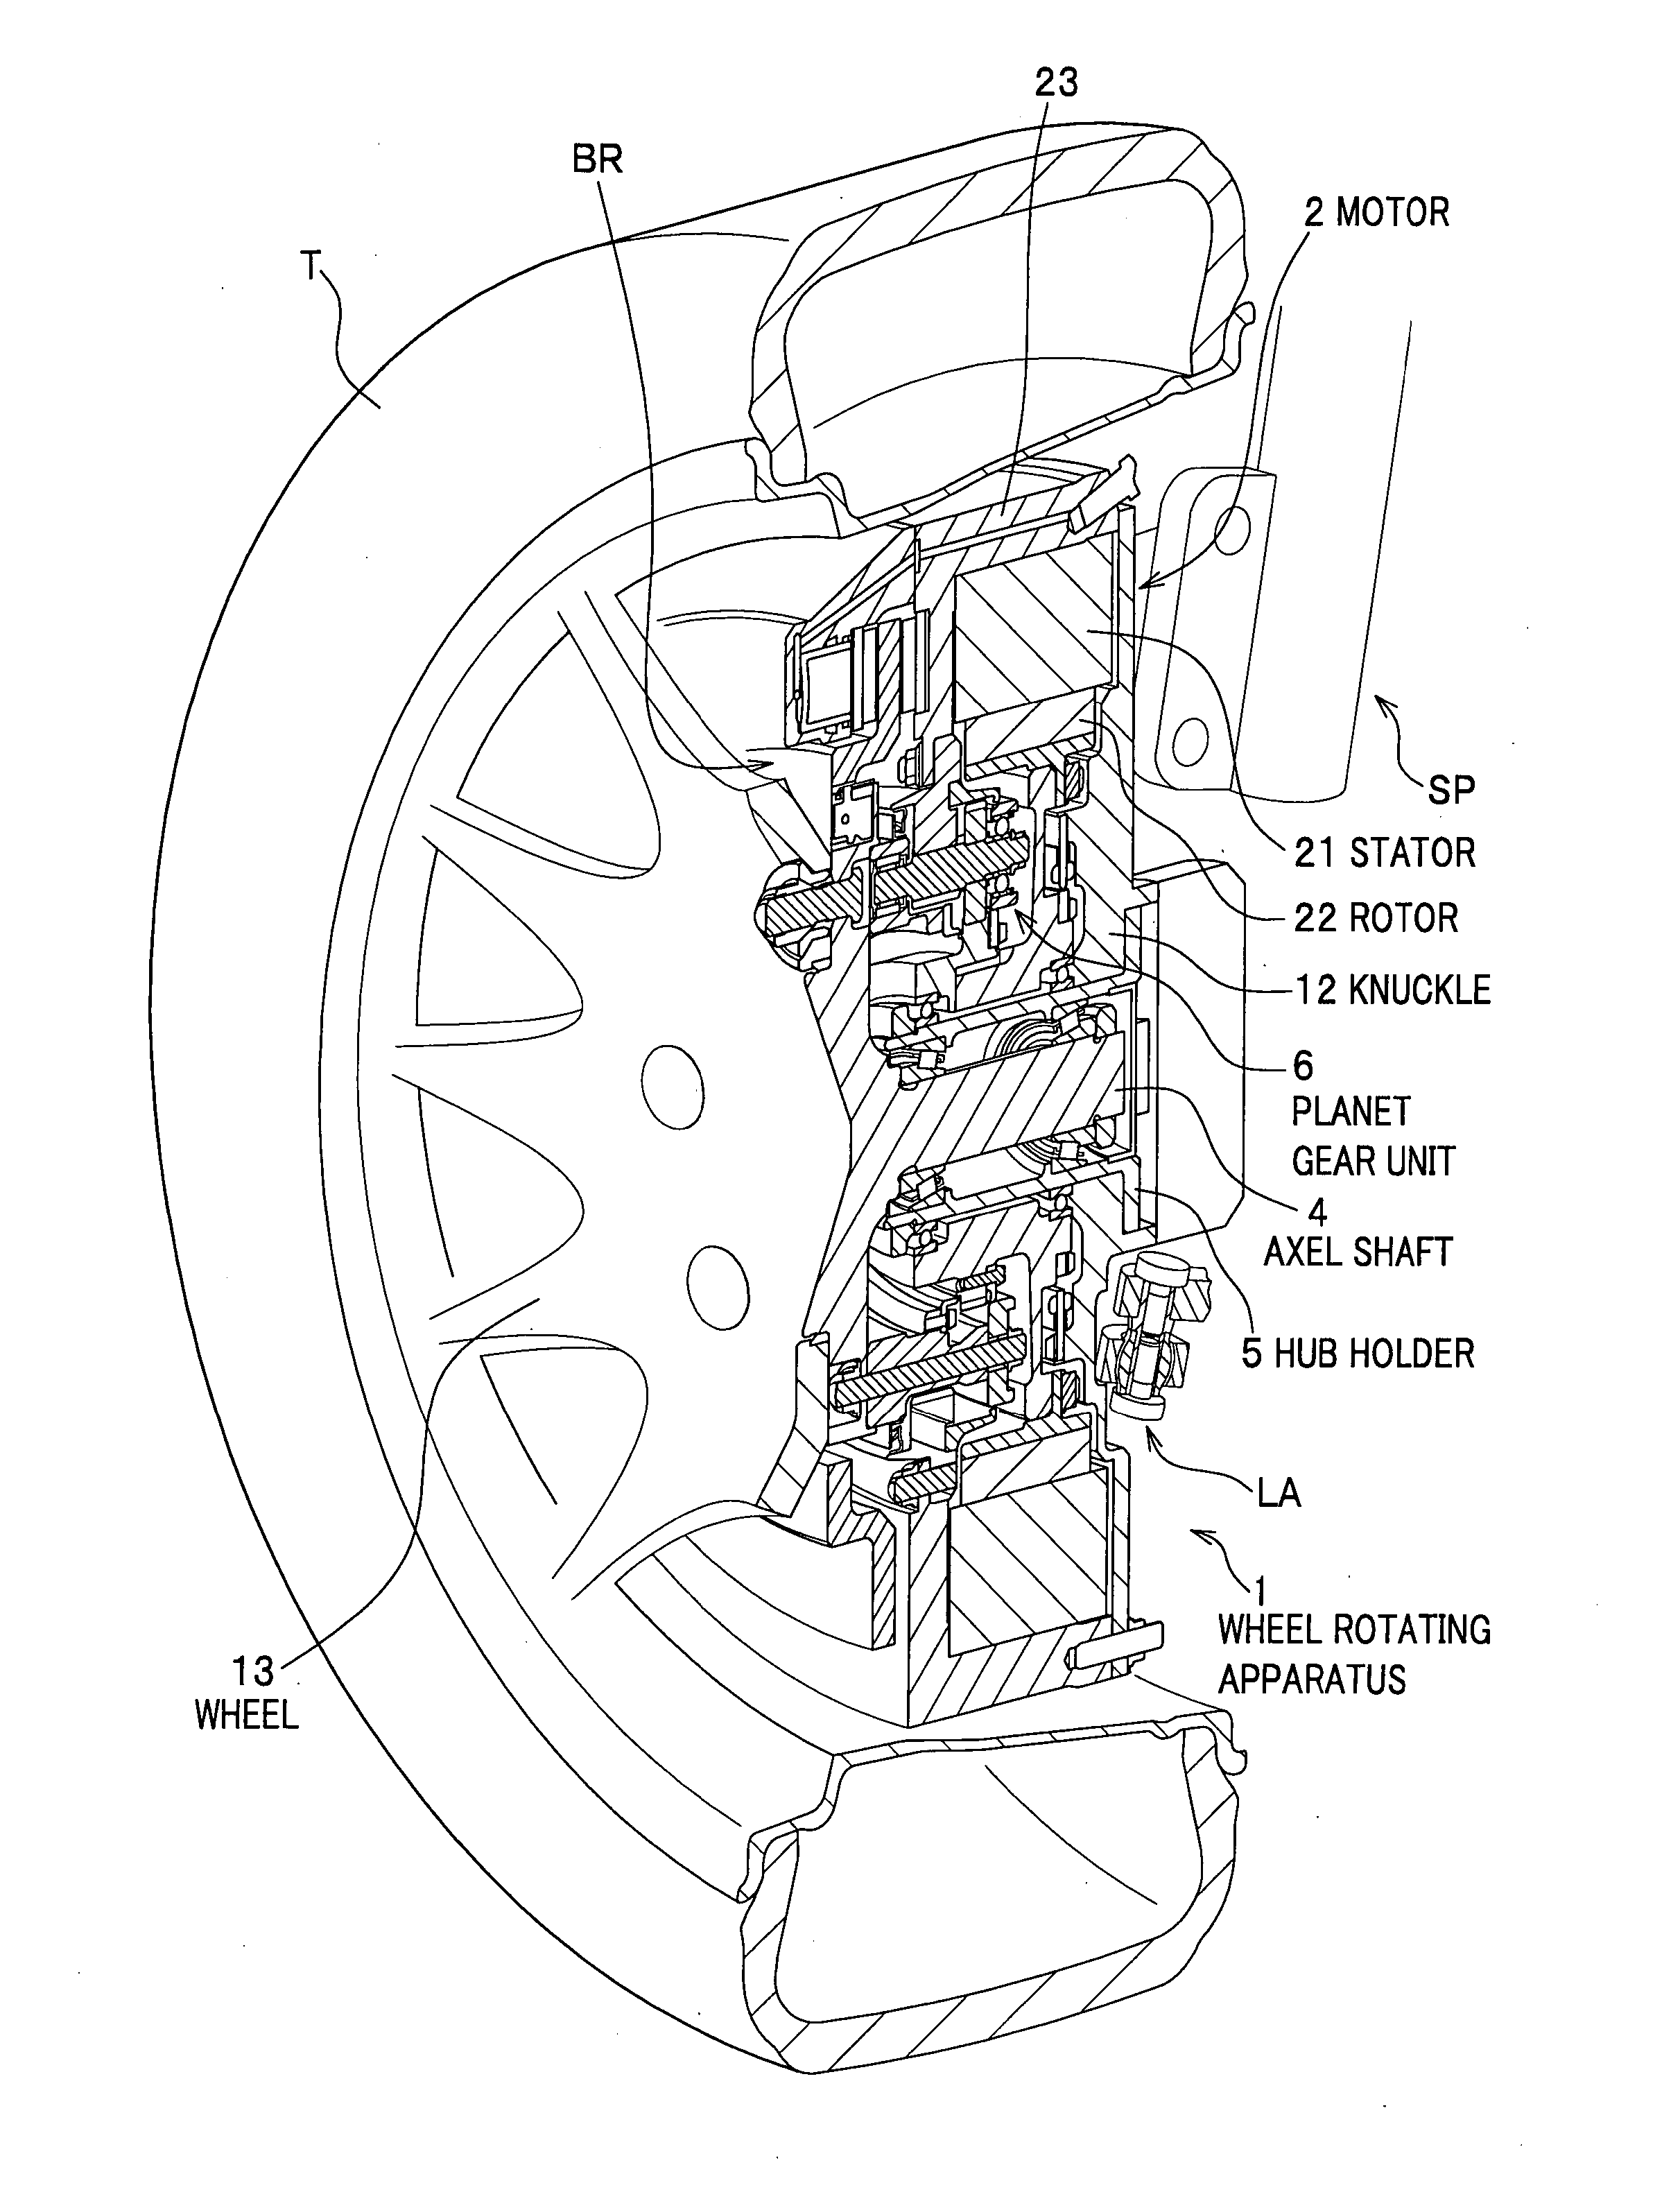 Wheel rotating apparatus and in-wheel motor vehicle